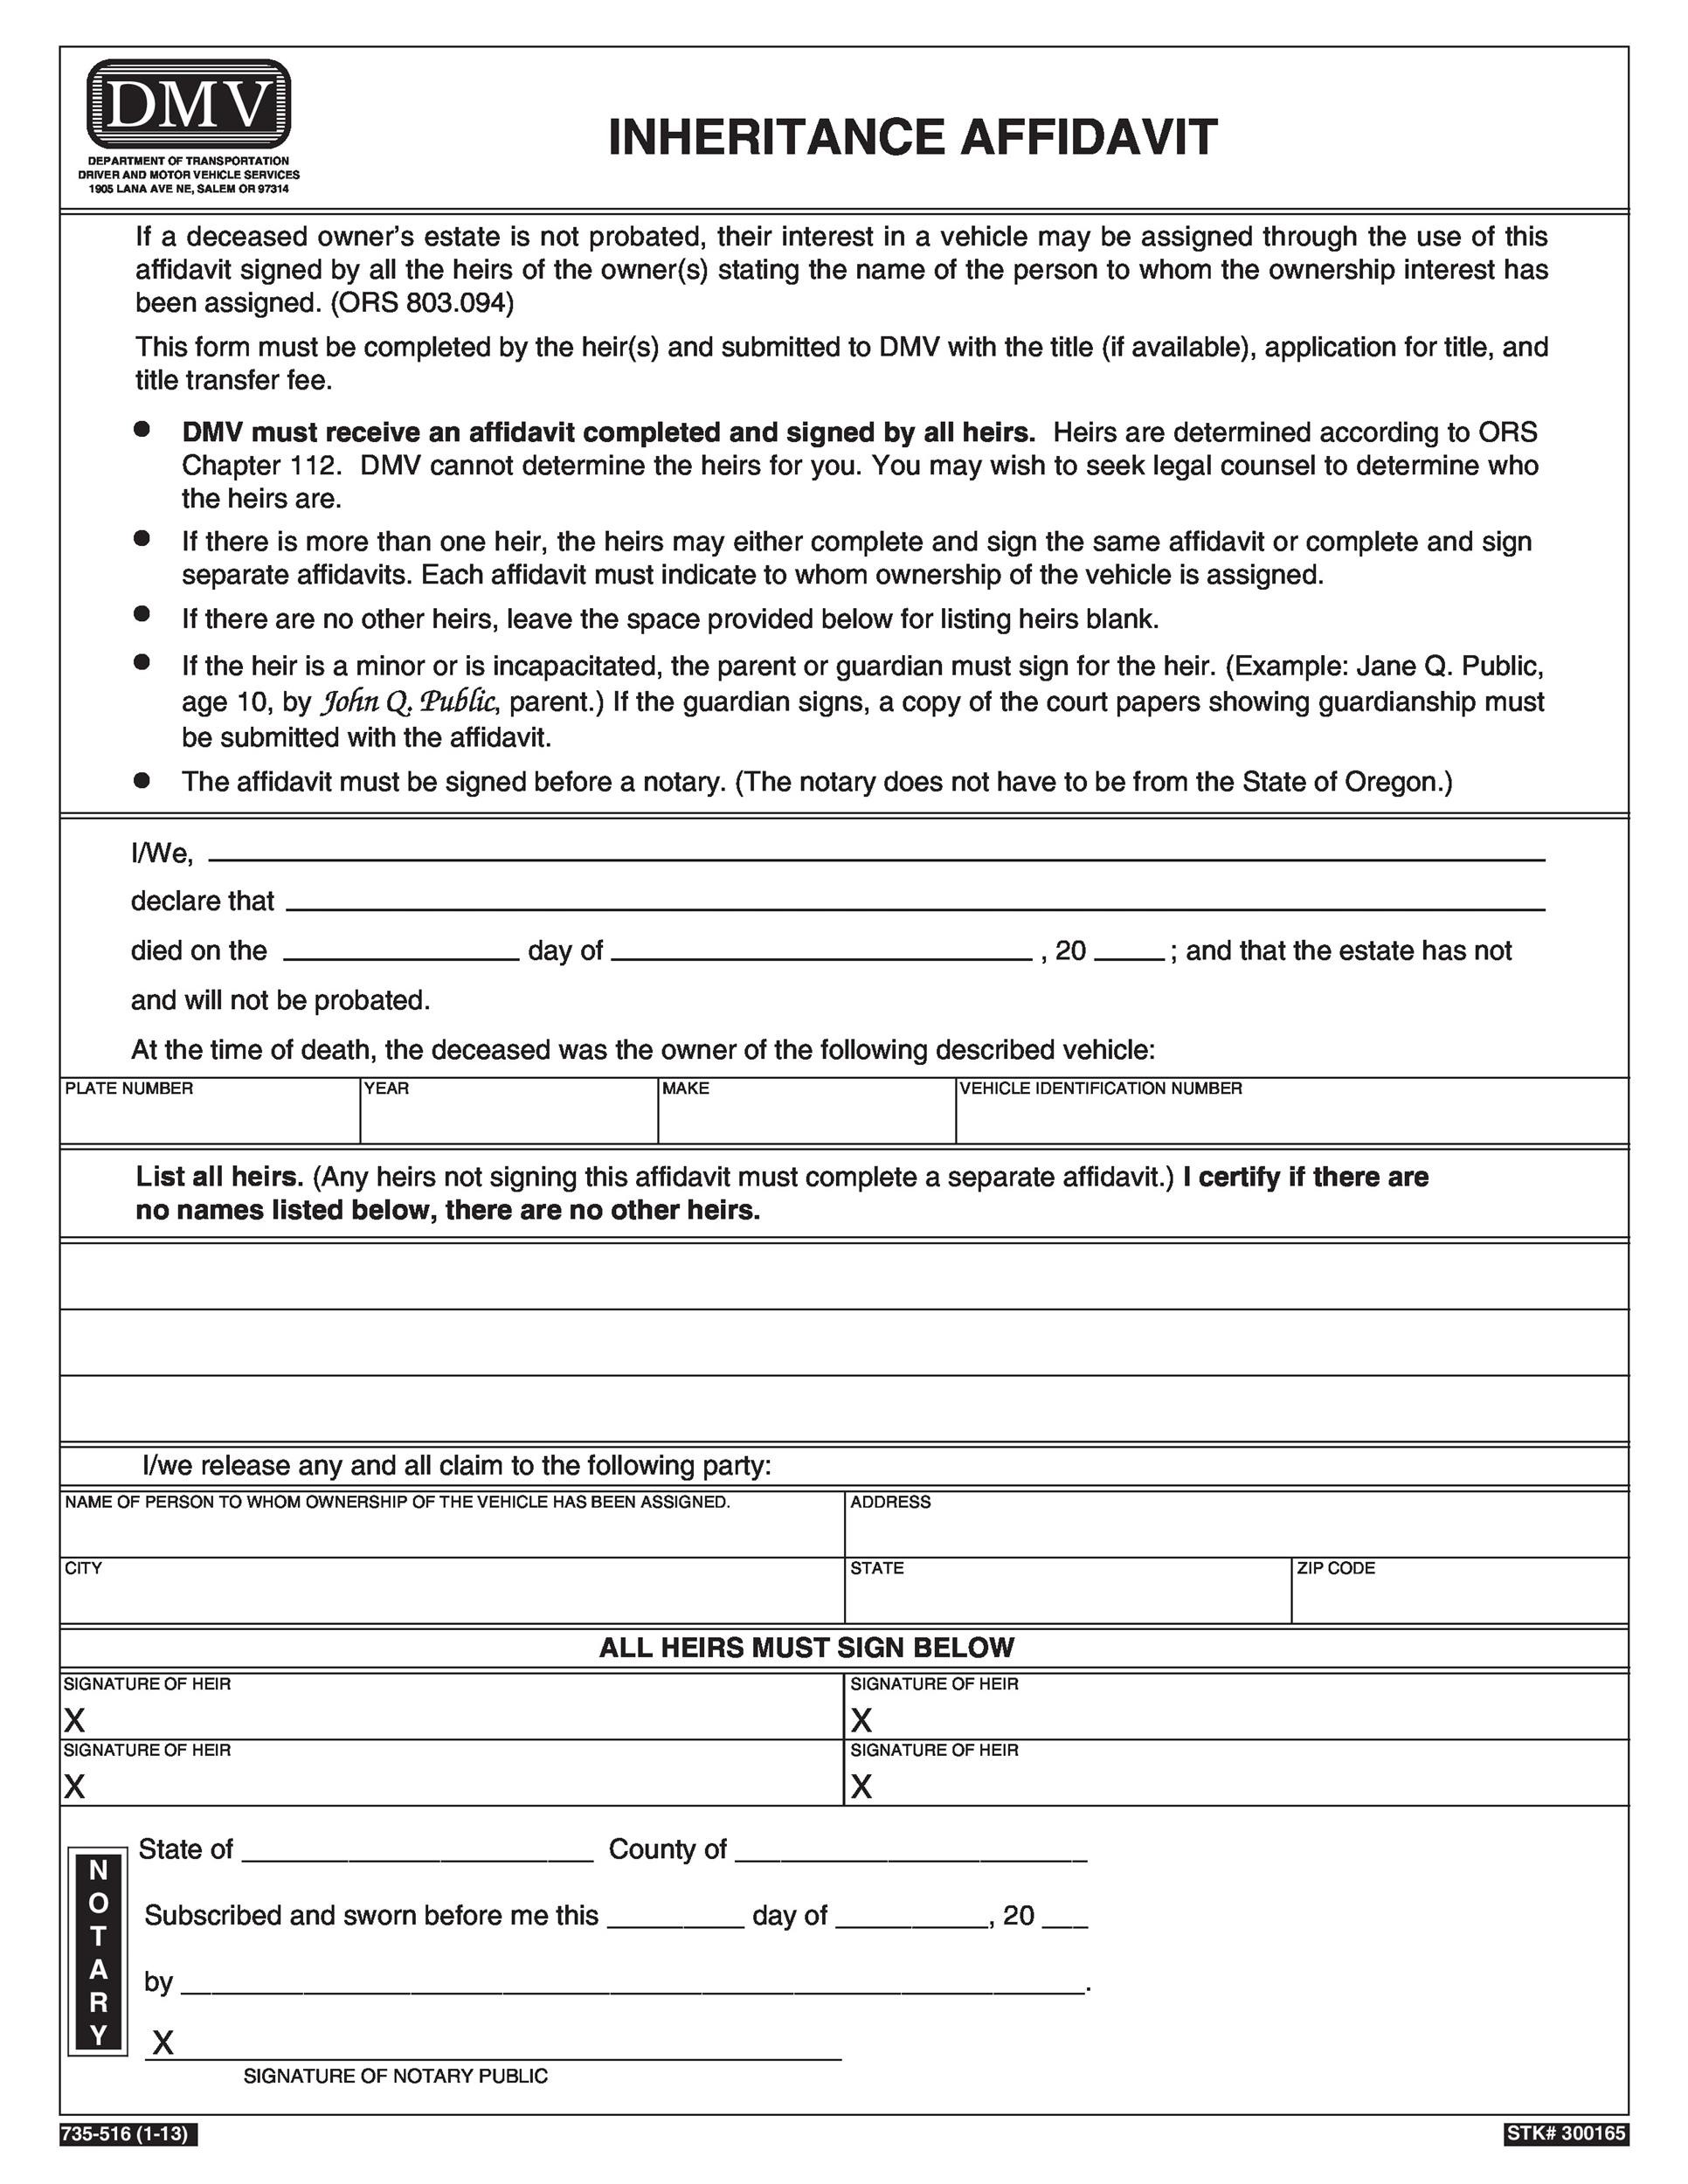 Free affidavit form 01